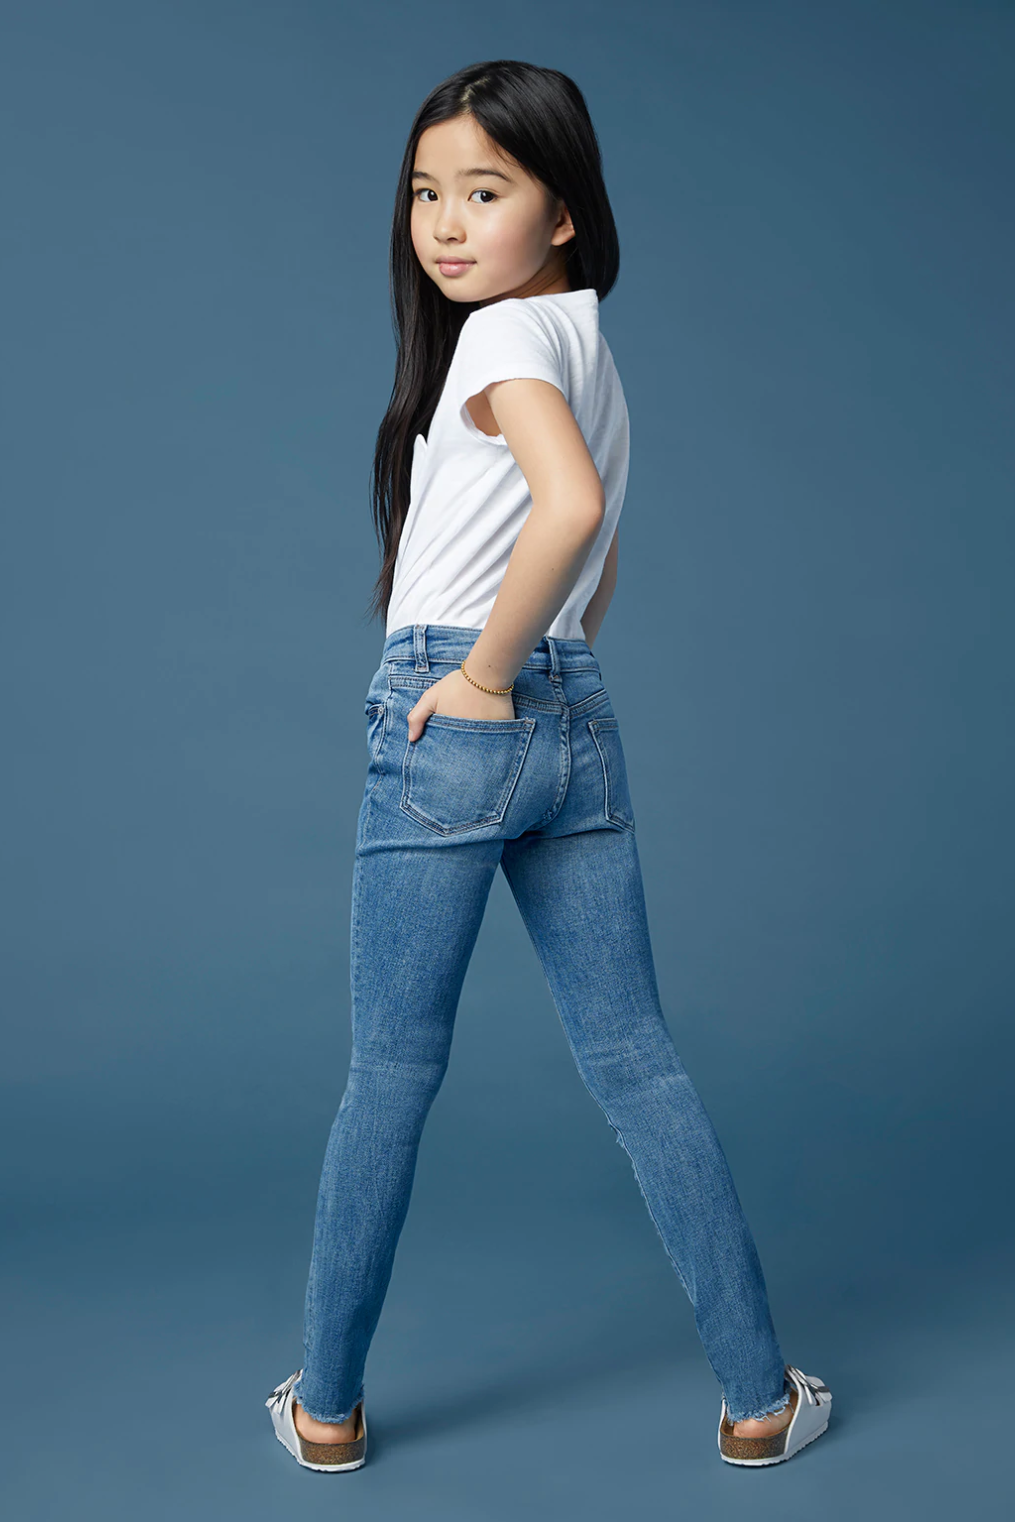 The Chloe Skinny Jeans In Gulfstream by DL1961